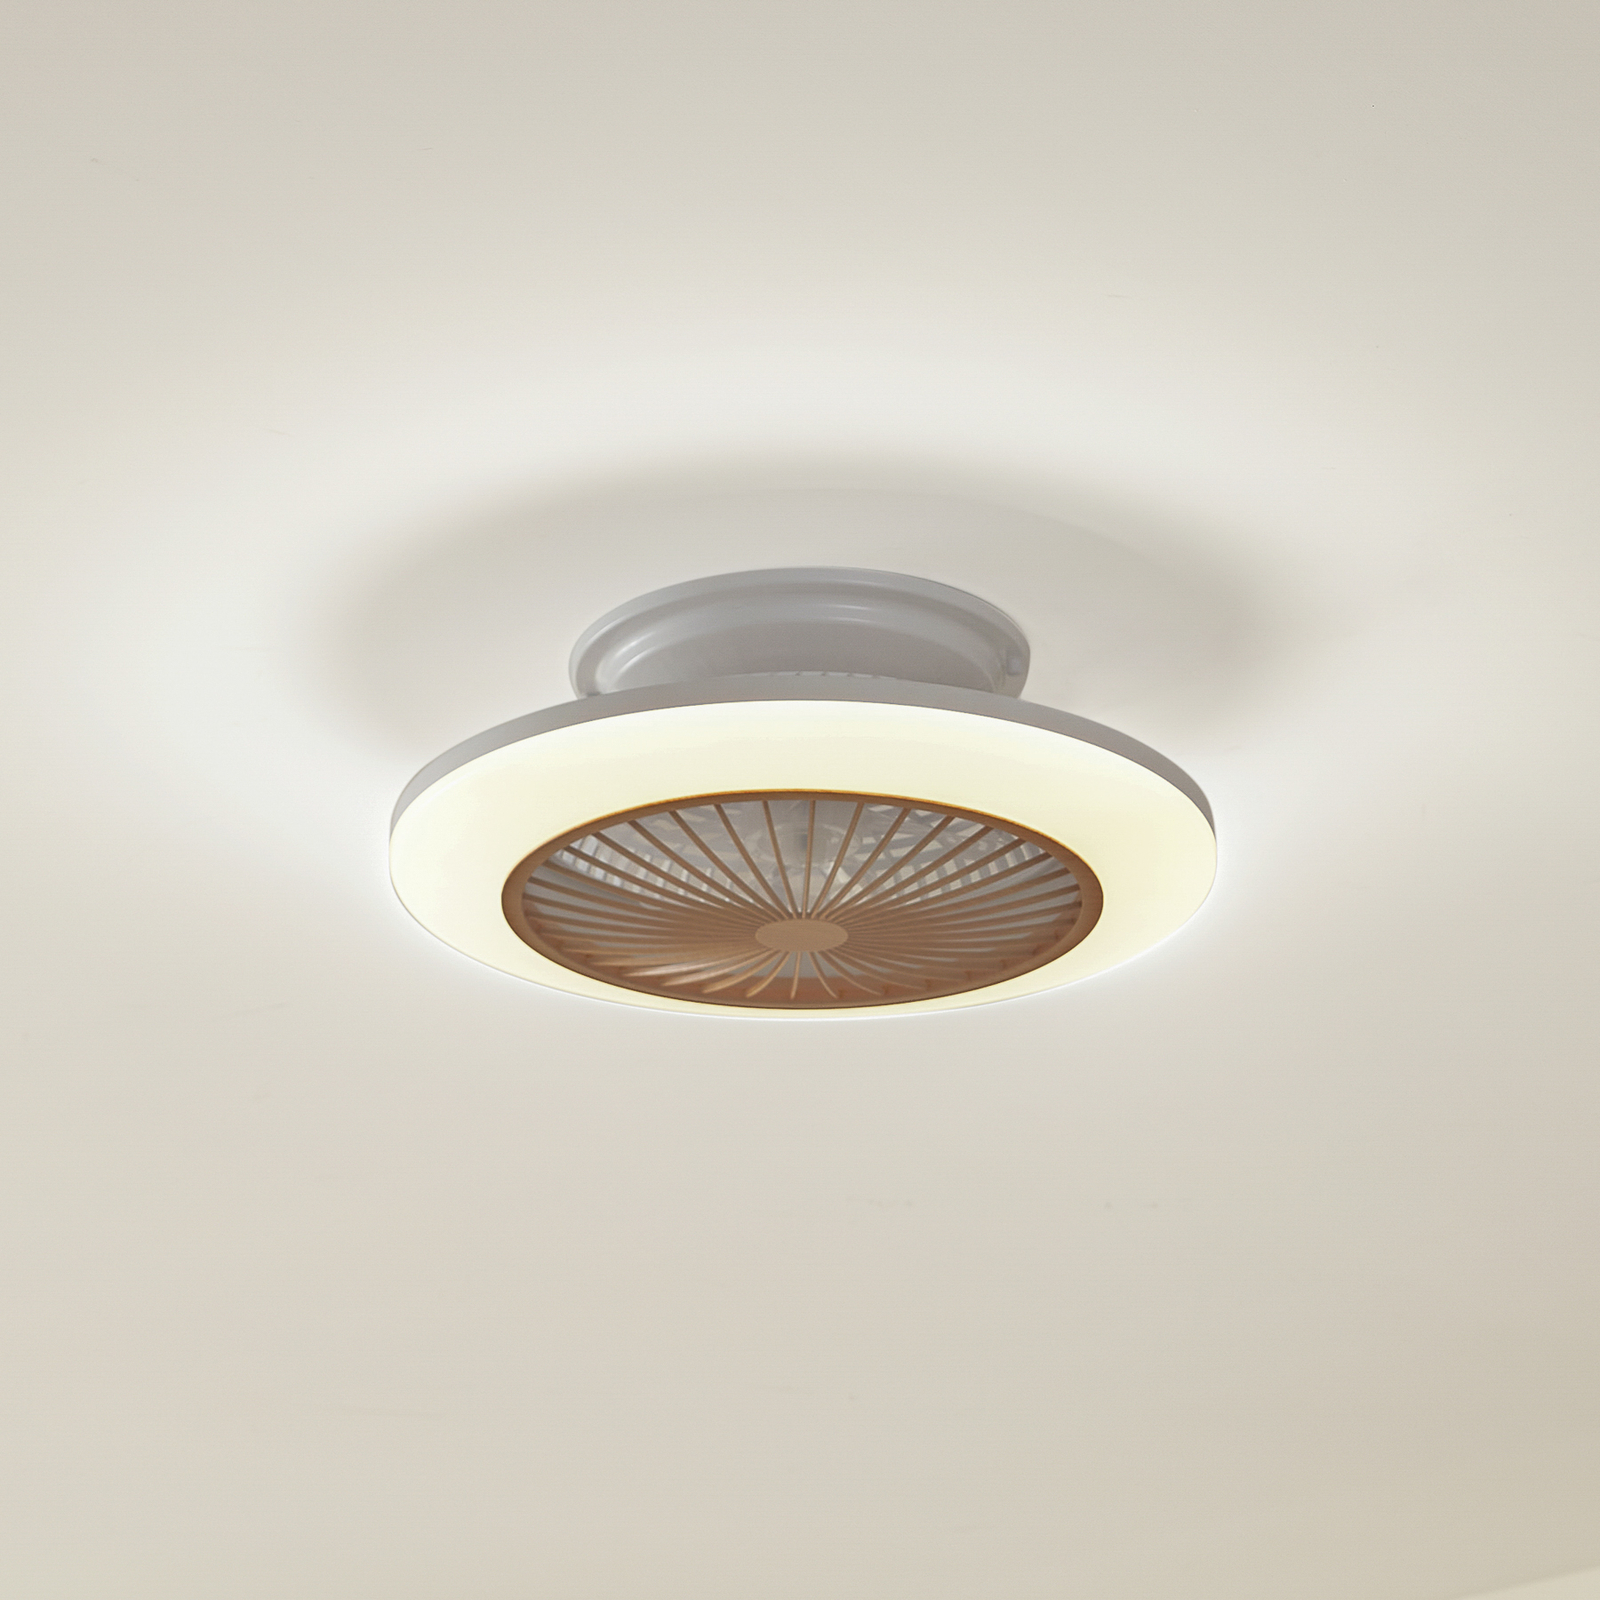 Lindby LED ceiling fan Mamuti, wood-coloured, quiet, 55 cm